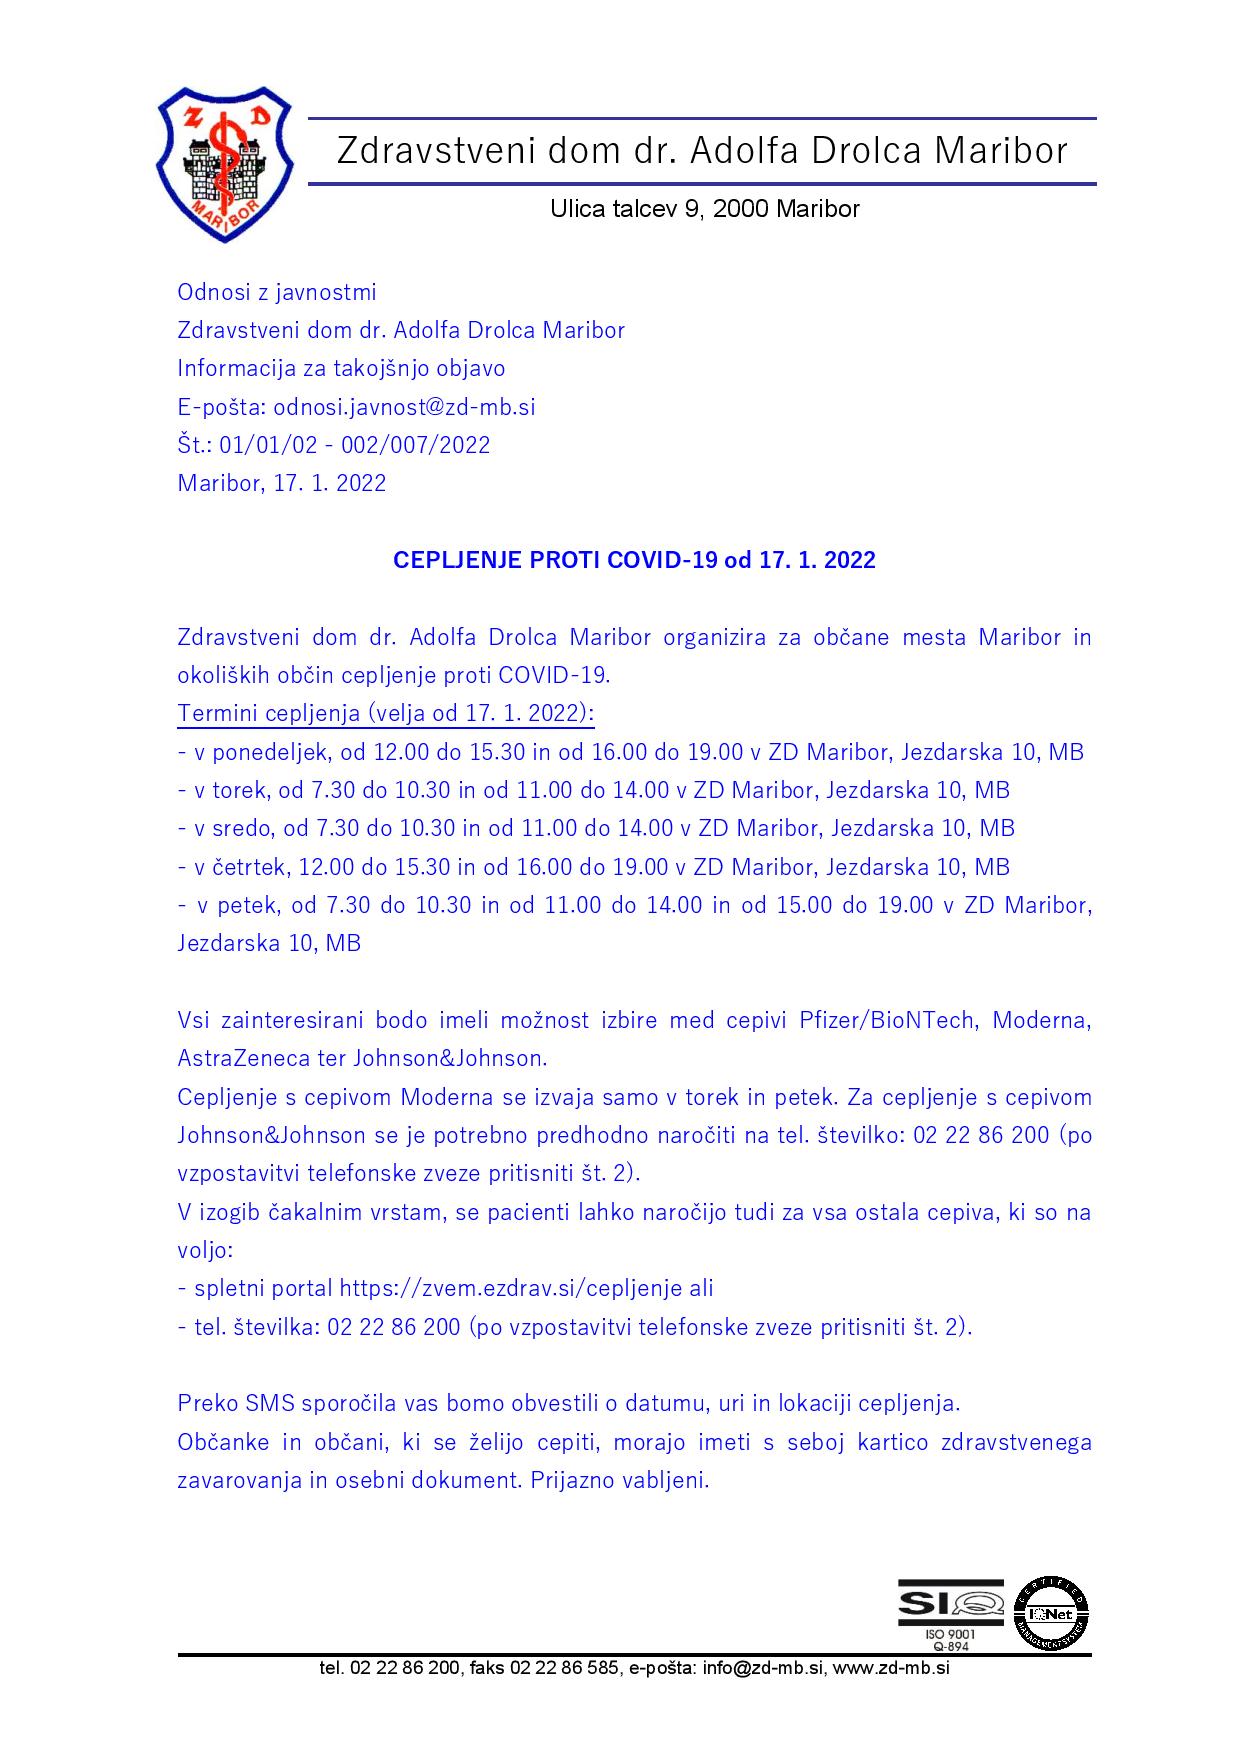 007- ZD Maribor - Cepljenje proti COVID-19  od 17. 1. 2022-page-001.jpg